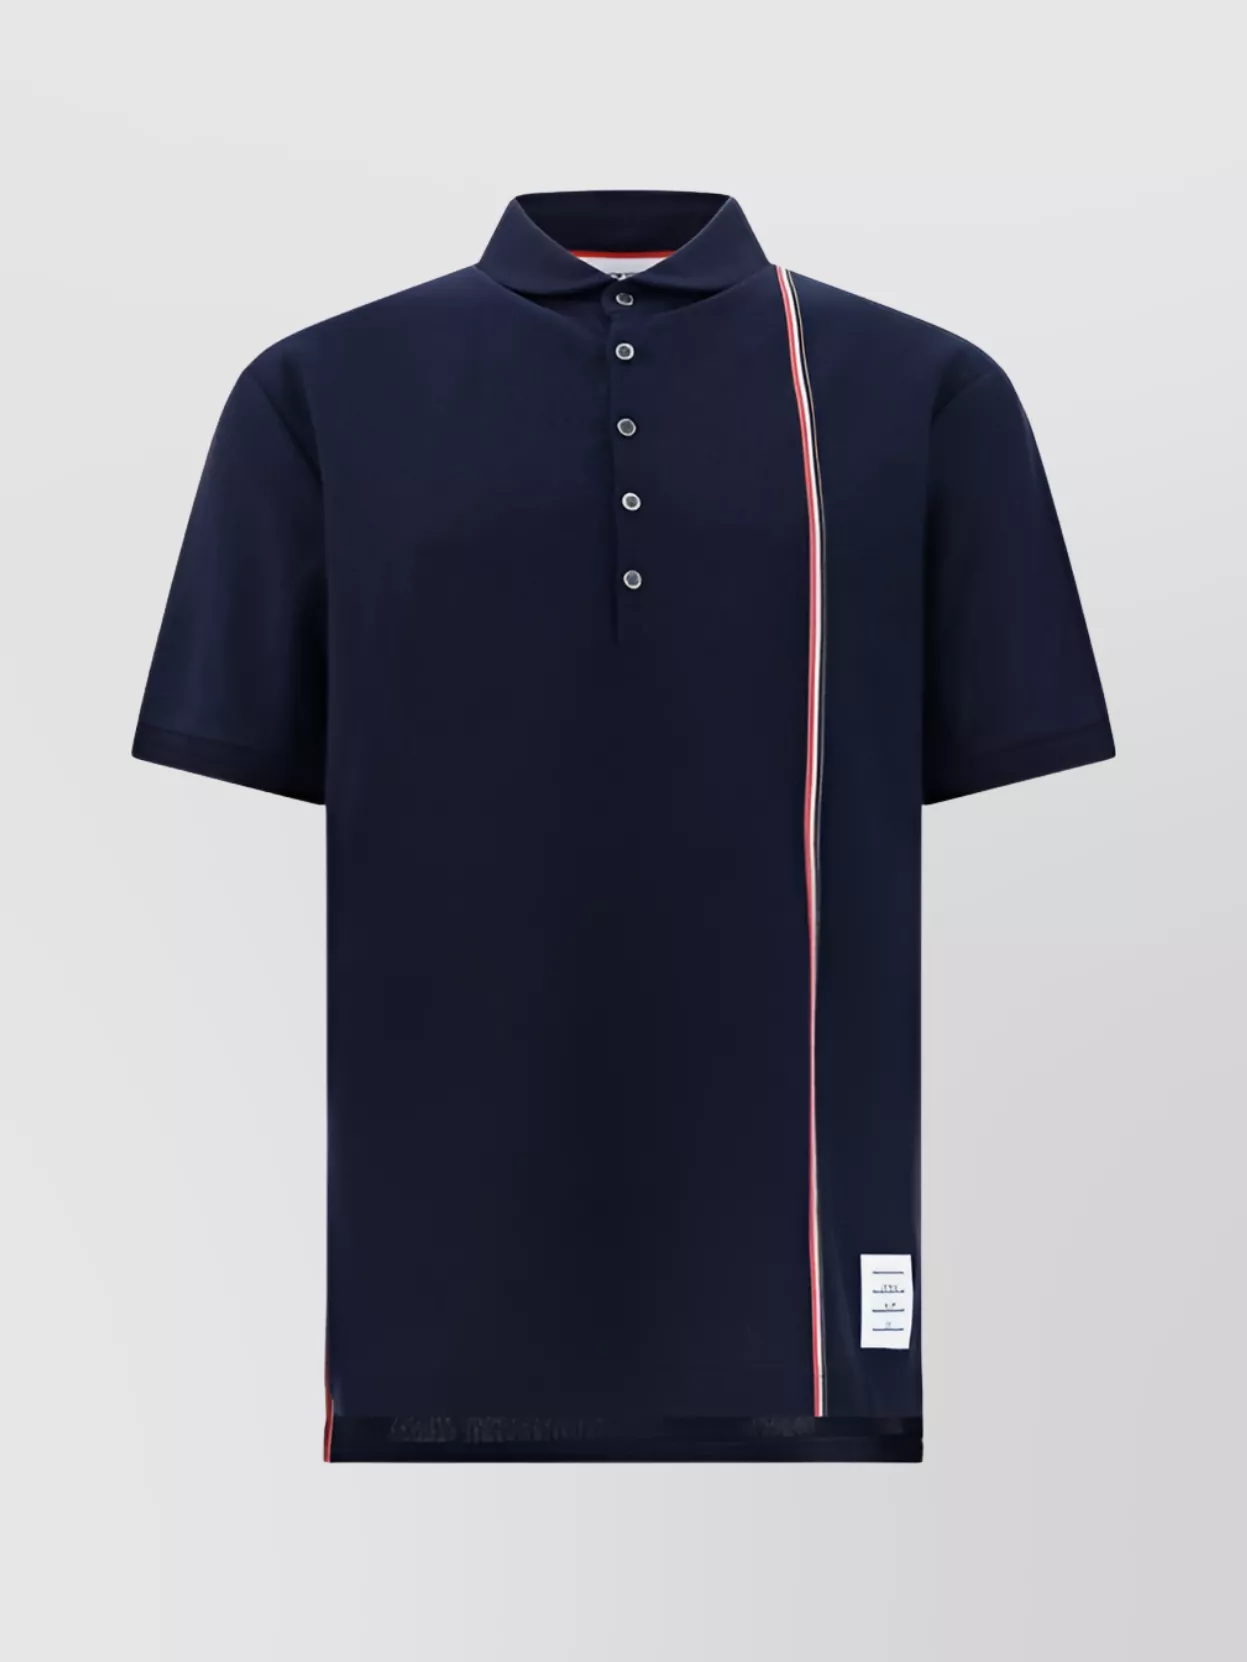 Thom Browne Tricolor Striped Cotton Polo Shirt